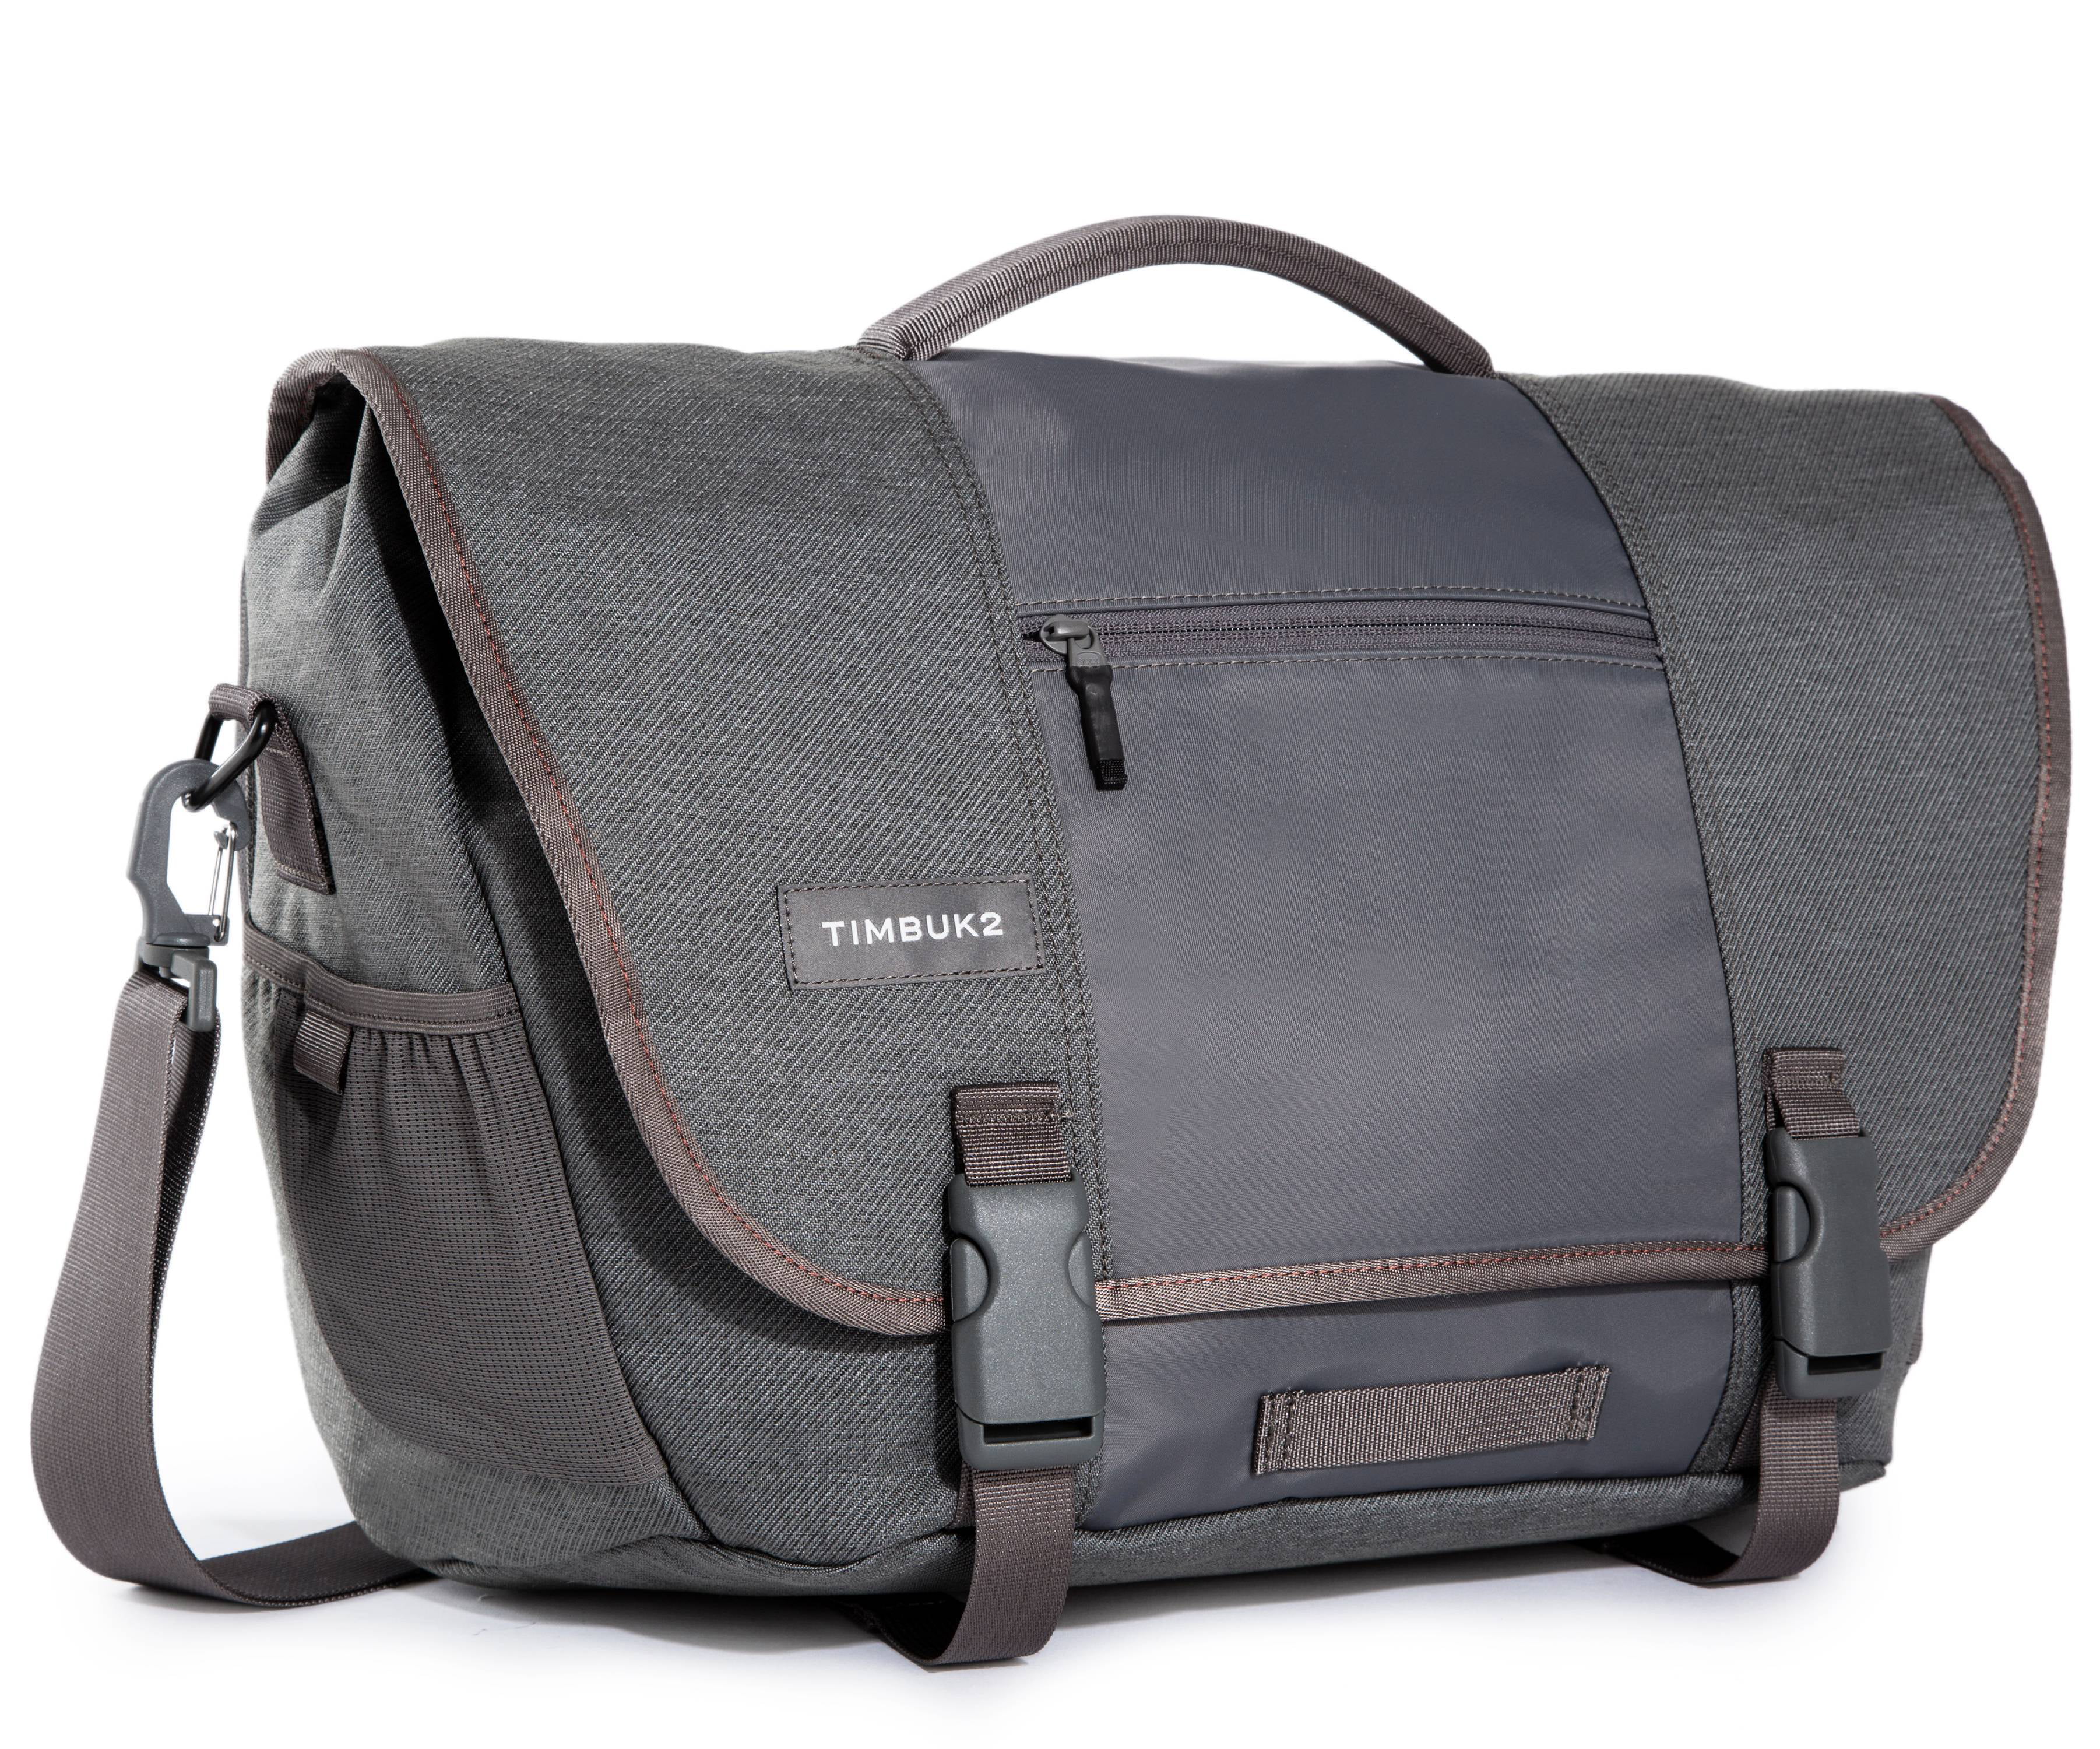 Timbuk2 Commute Messenger Bag (Gunmetal/Adobe, Large) - Walmart.com